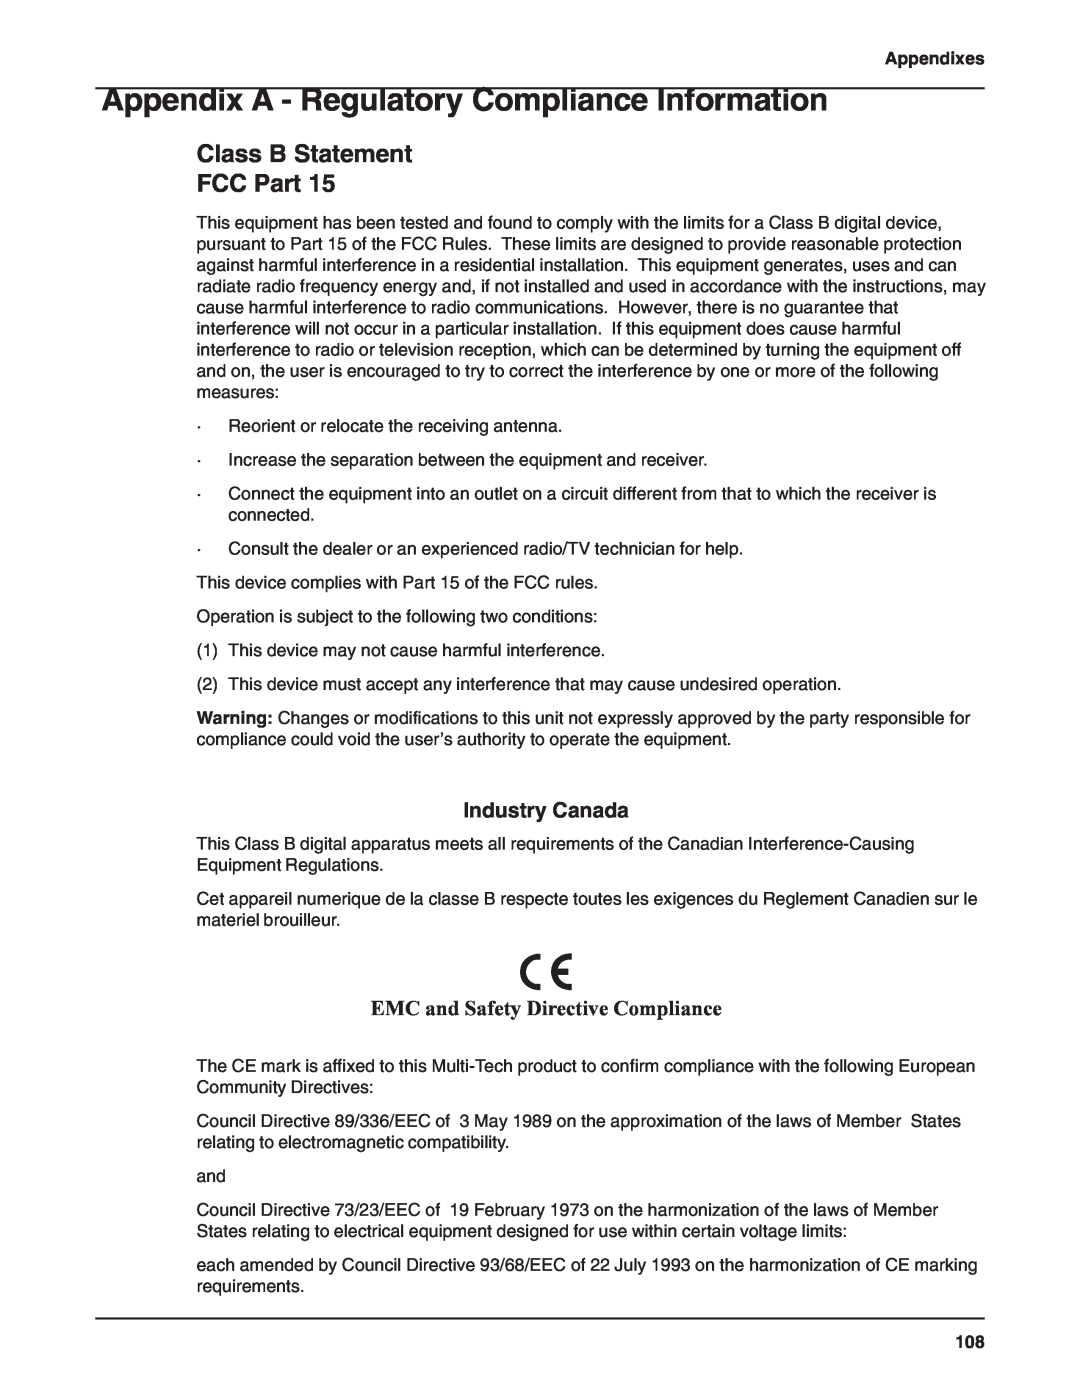 Multi-Tech Systems RF802EW Appendix A - Regulatory Compliance Information, Class B Statement FCC Part, Industry Canada 